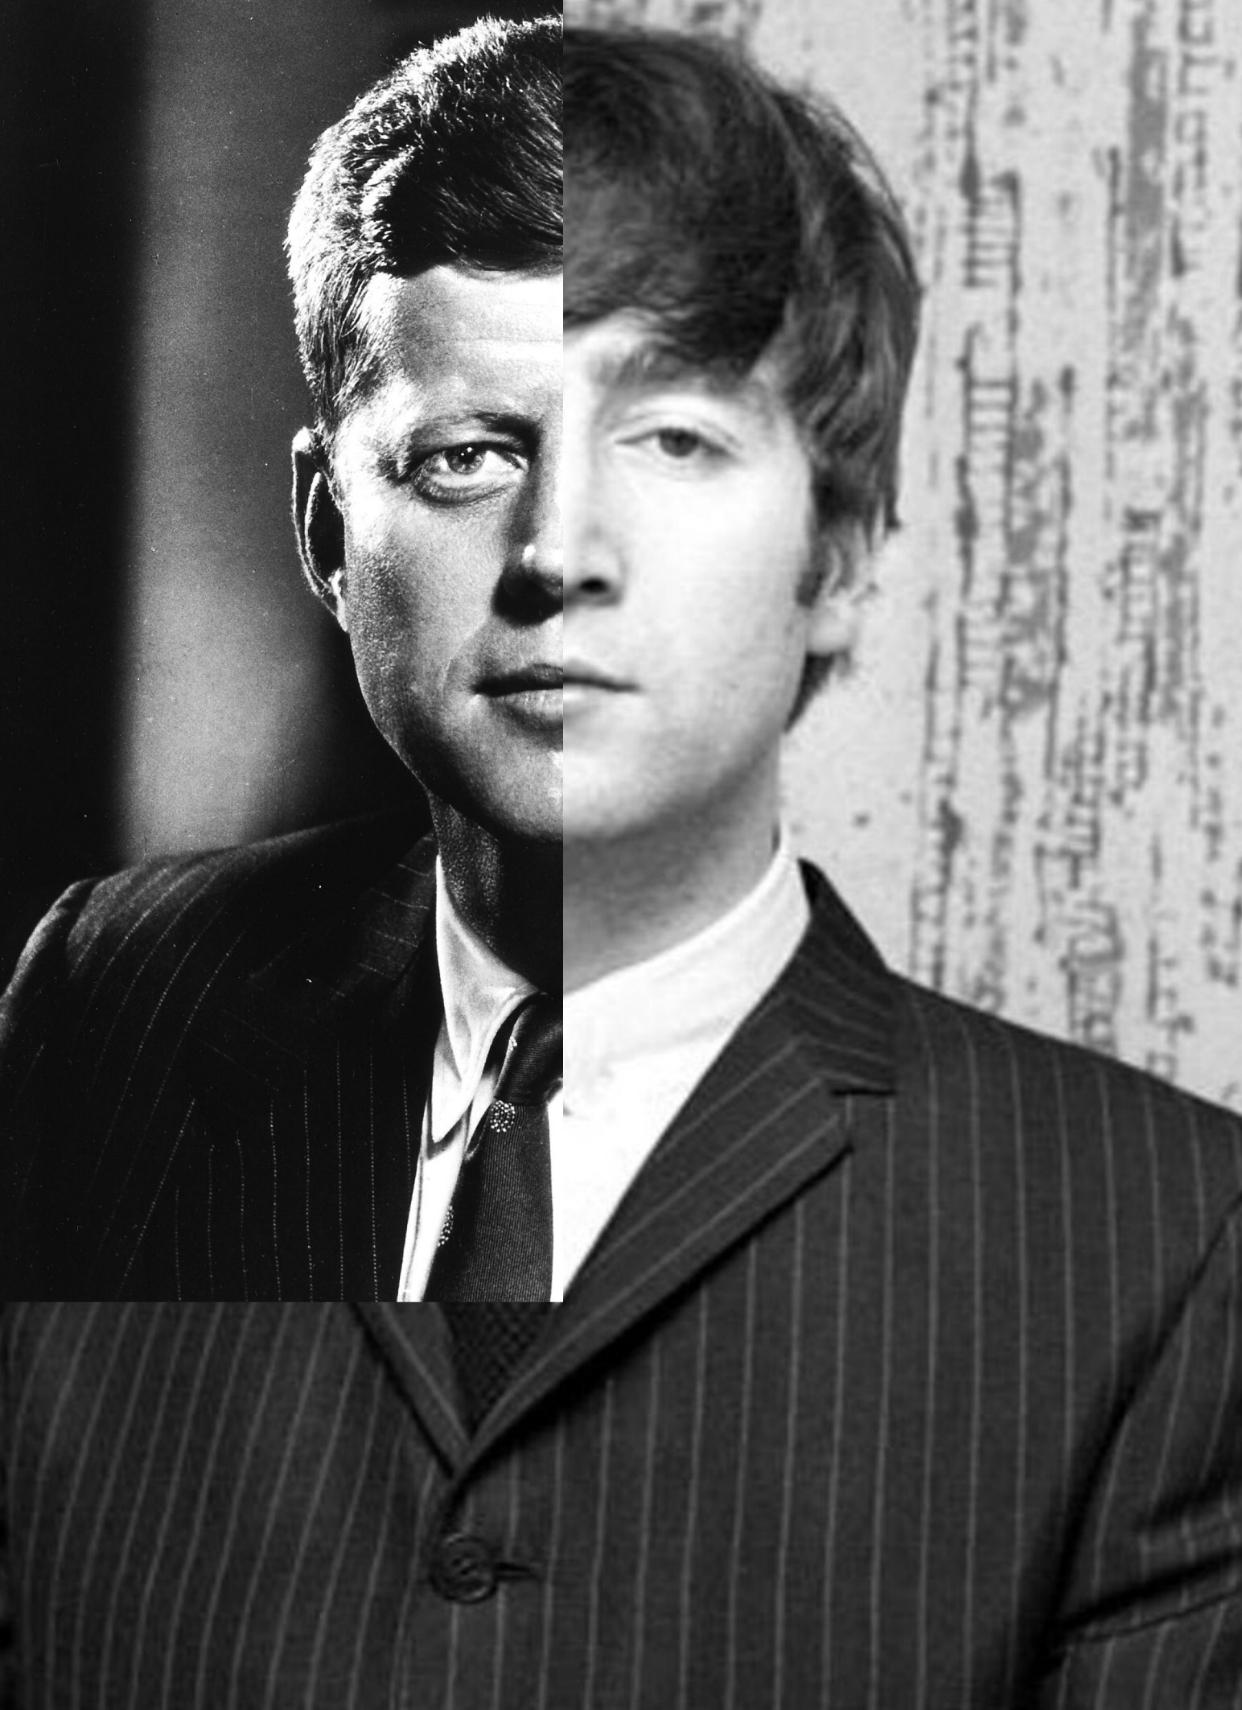 Gisela Faure Black and White Photograph - John Kennedy + John Lennon, Contemporary Art, Photography, 21st Century